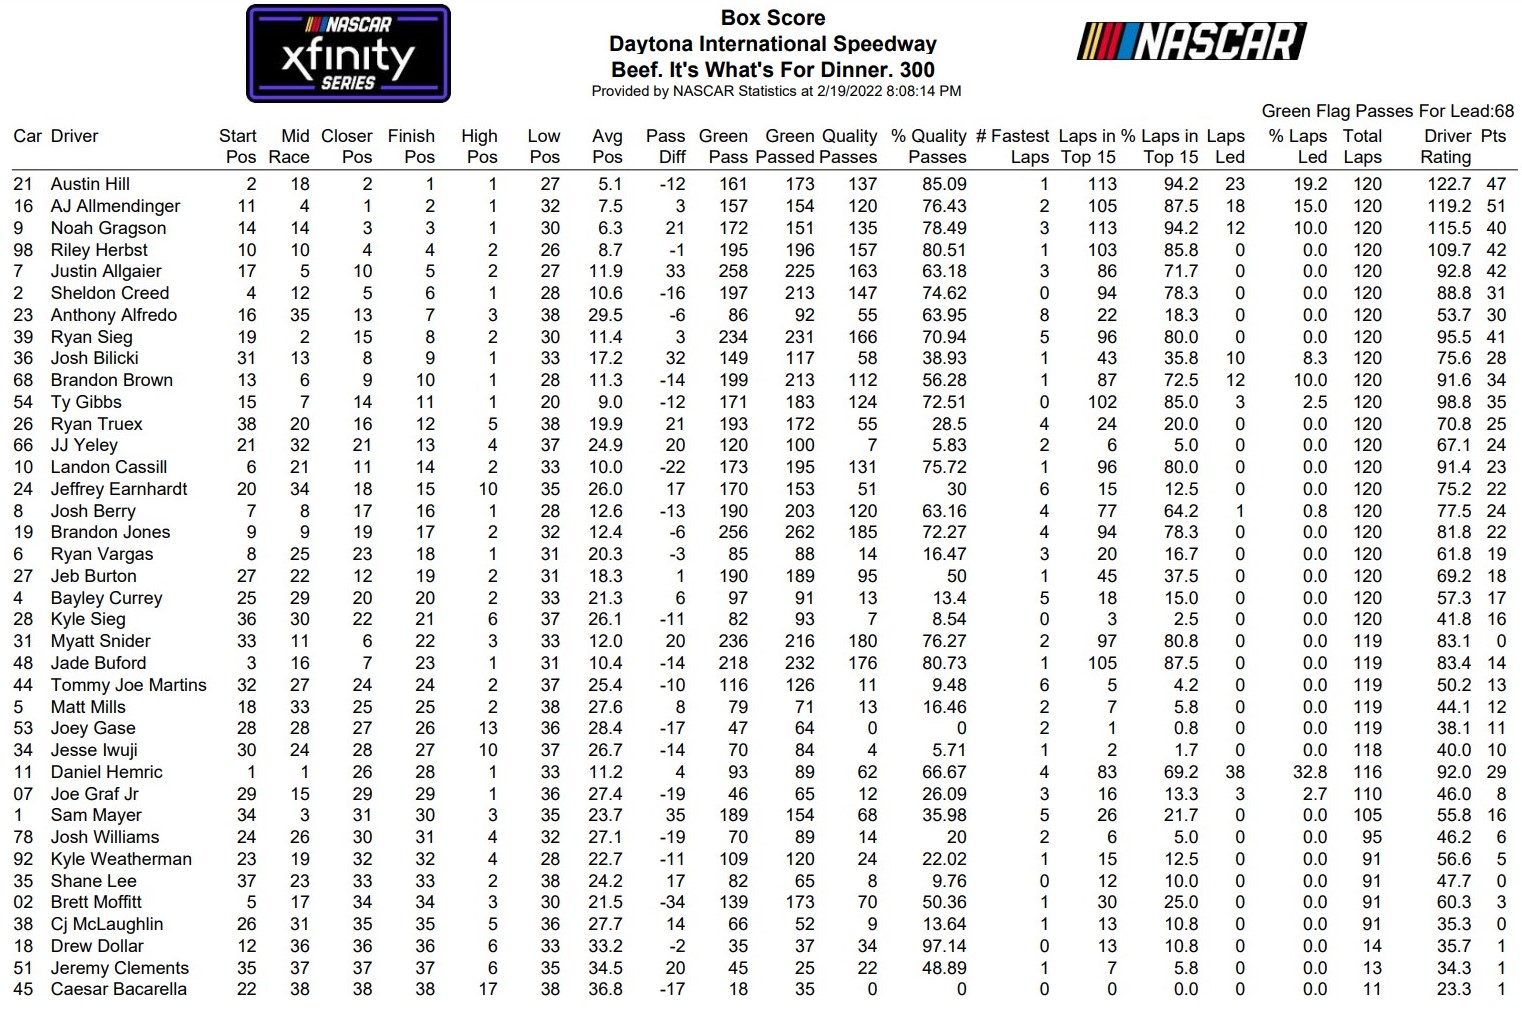 Daytona Xfinity Series 2022 Loop Data Box Score - ifantasyrace.com